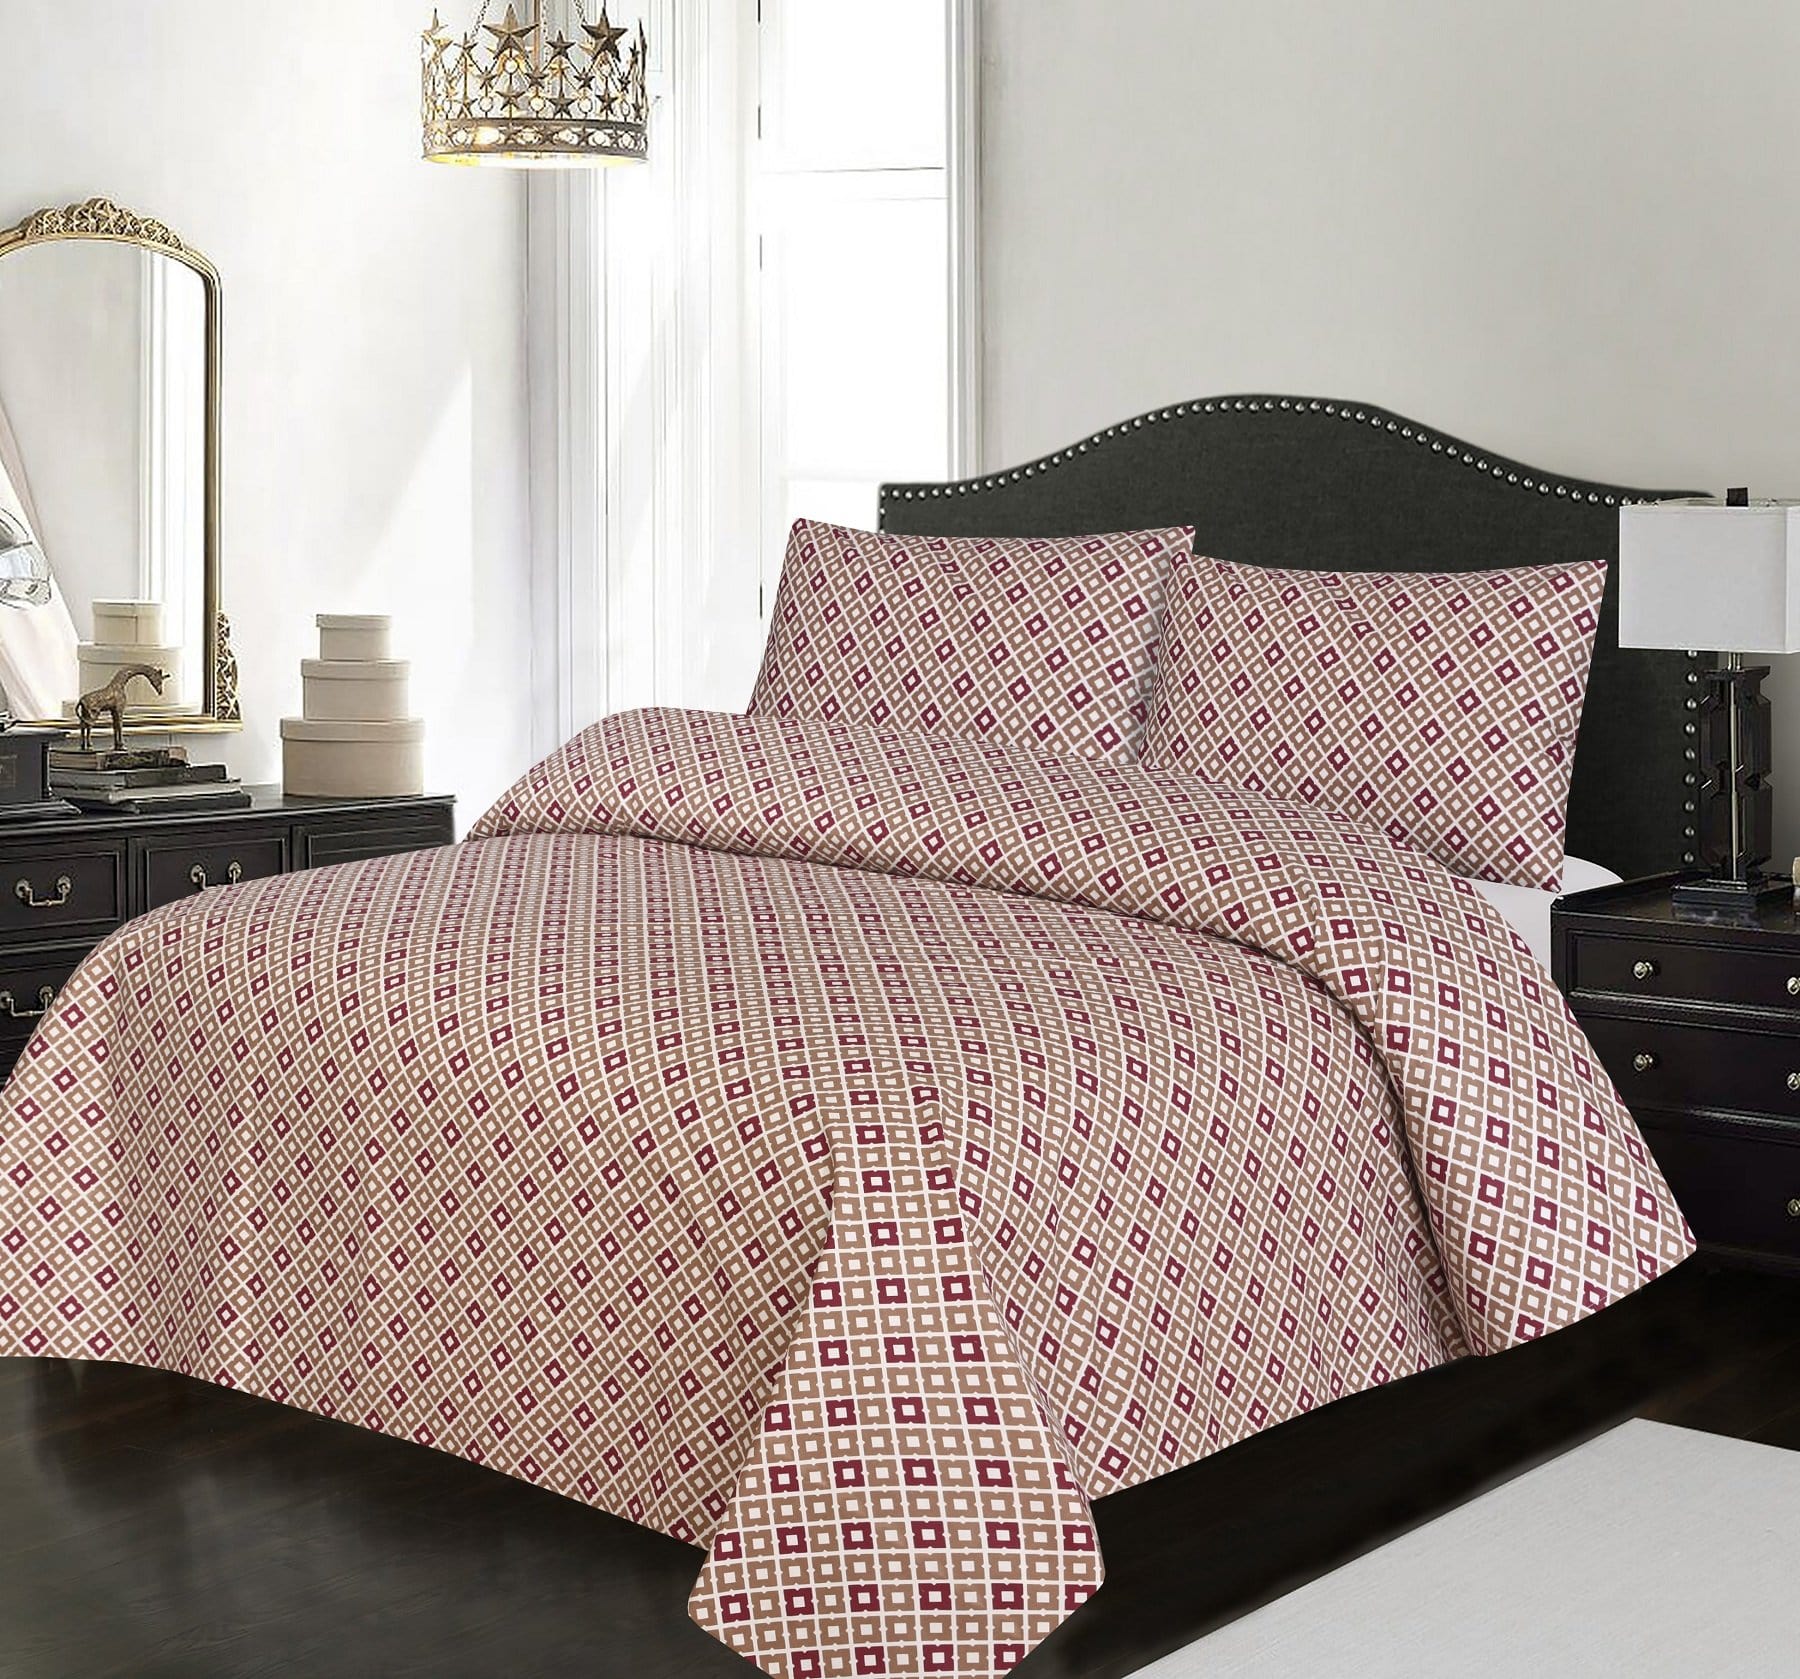 Grace D502-Cotton pc Single size Bedsheet with 1 pillow cover.